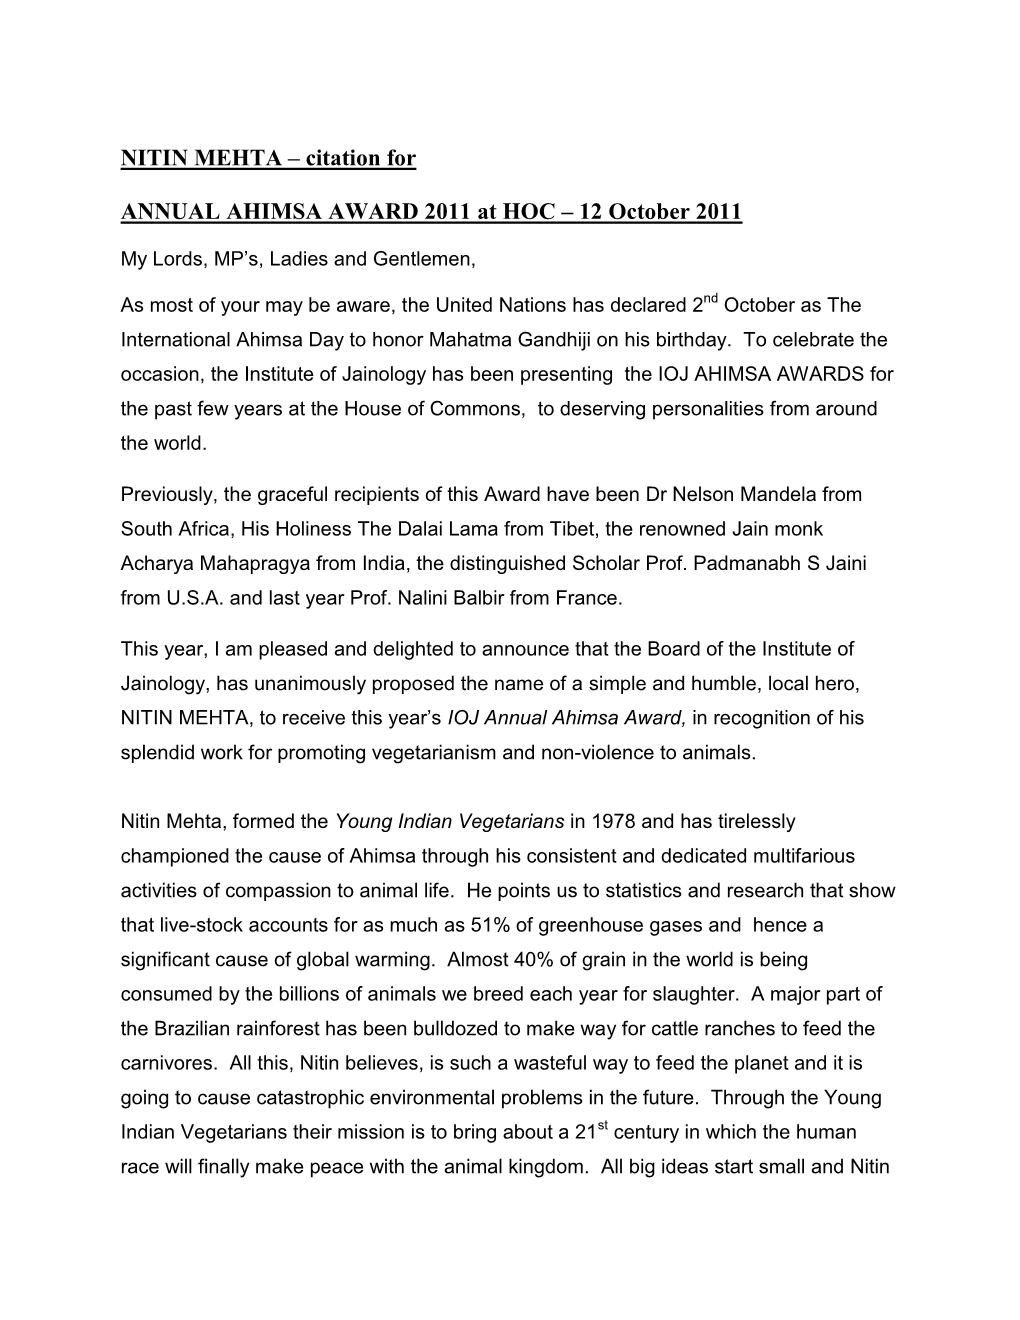 NITIN MEHTA – Citation for ANNUAL AHIMSA AWARD 2011 at HOC – 12